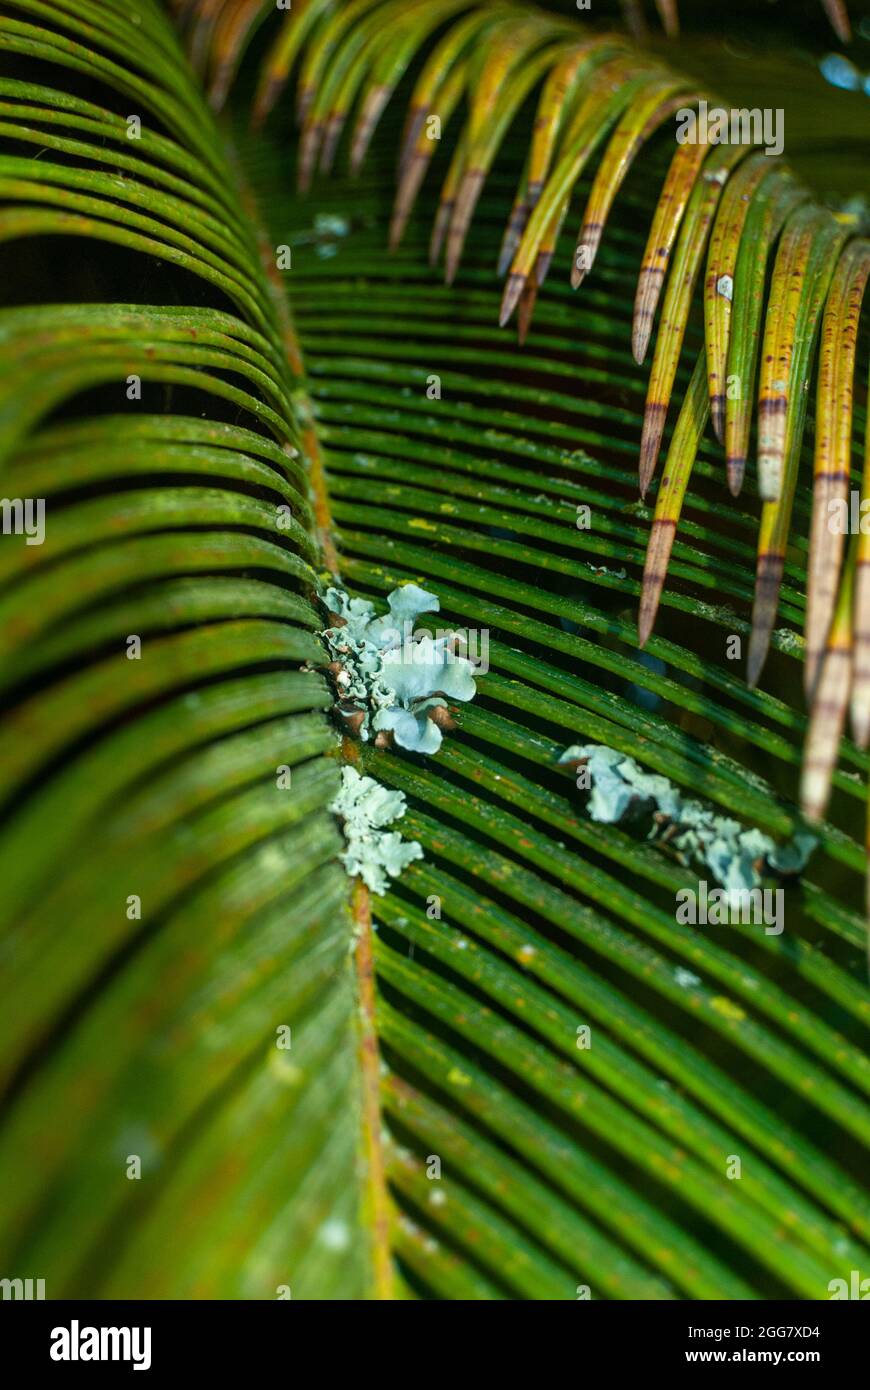 Eine kleine Flechte auf einem grünen Palmenblatt Nahaufnahme - Parmelia sulcata, Vertikal, selektiver Fokus Stockfoto